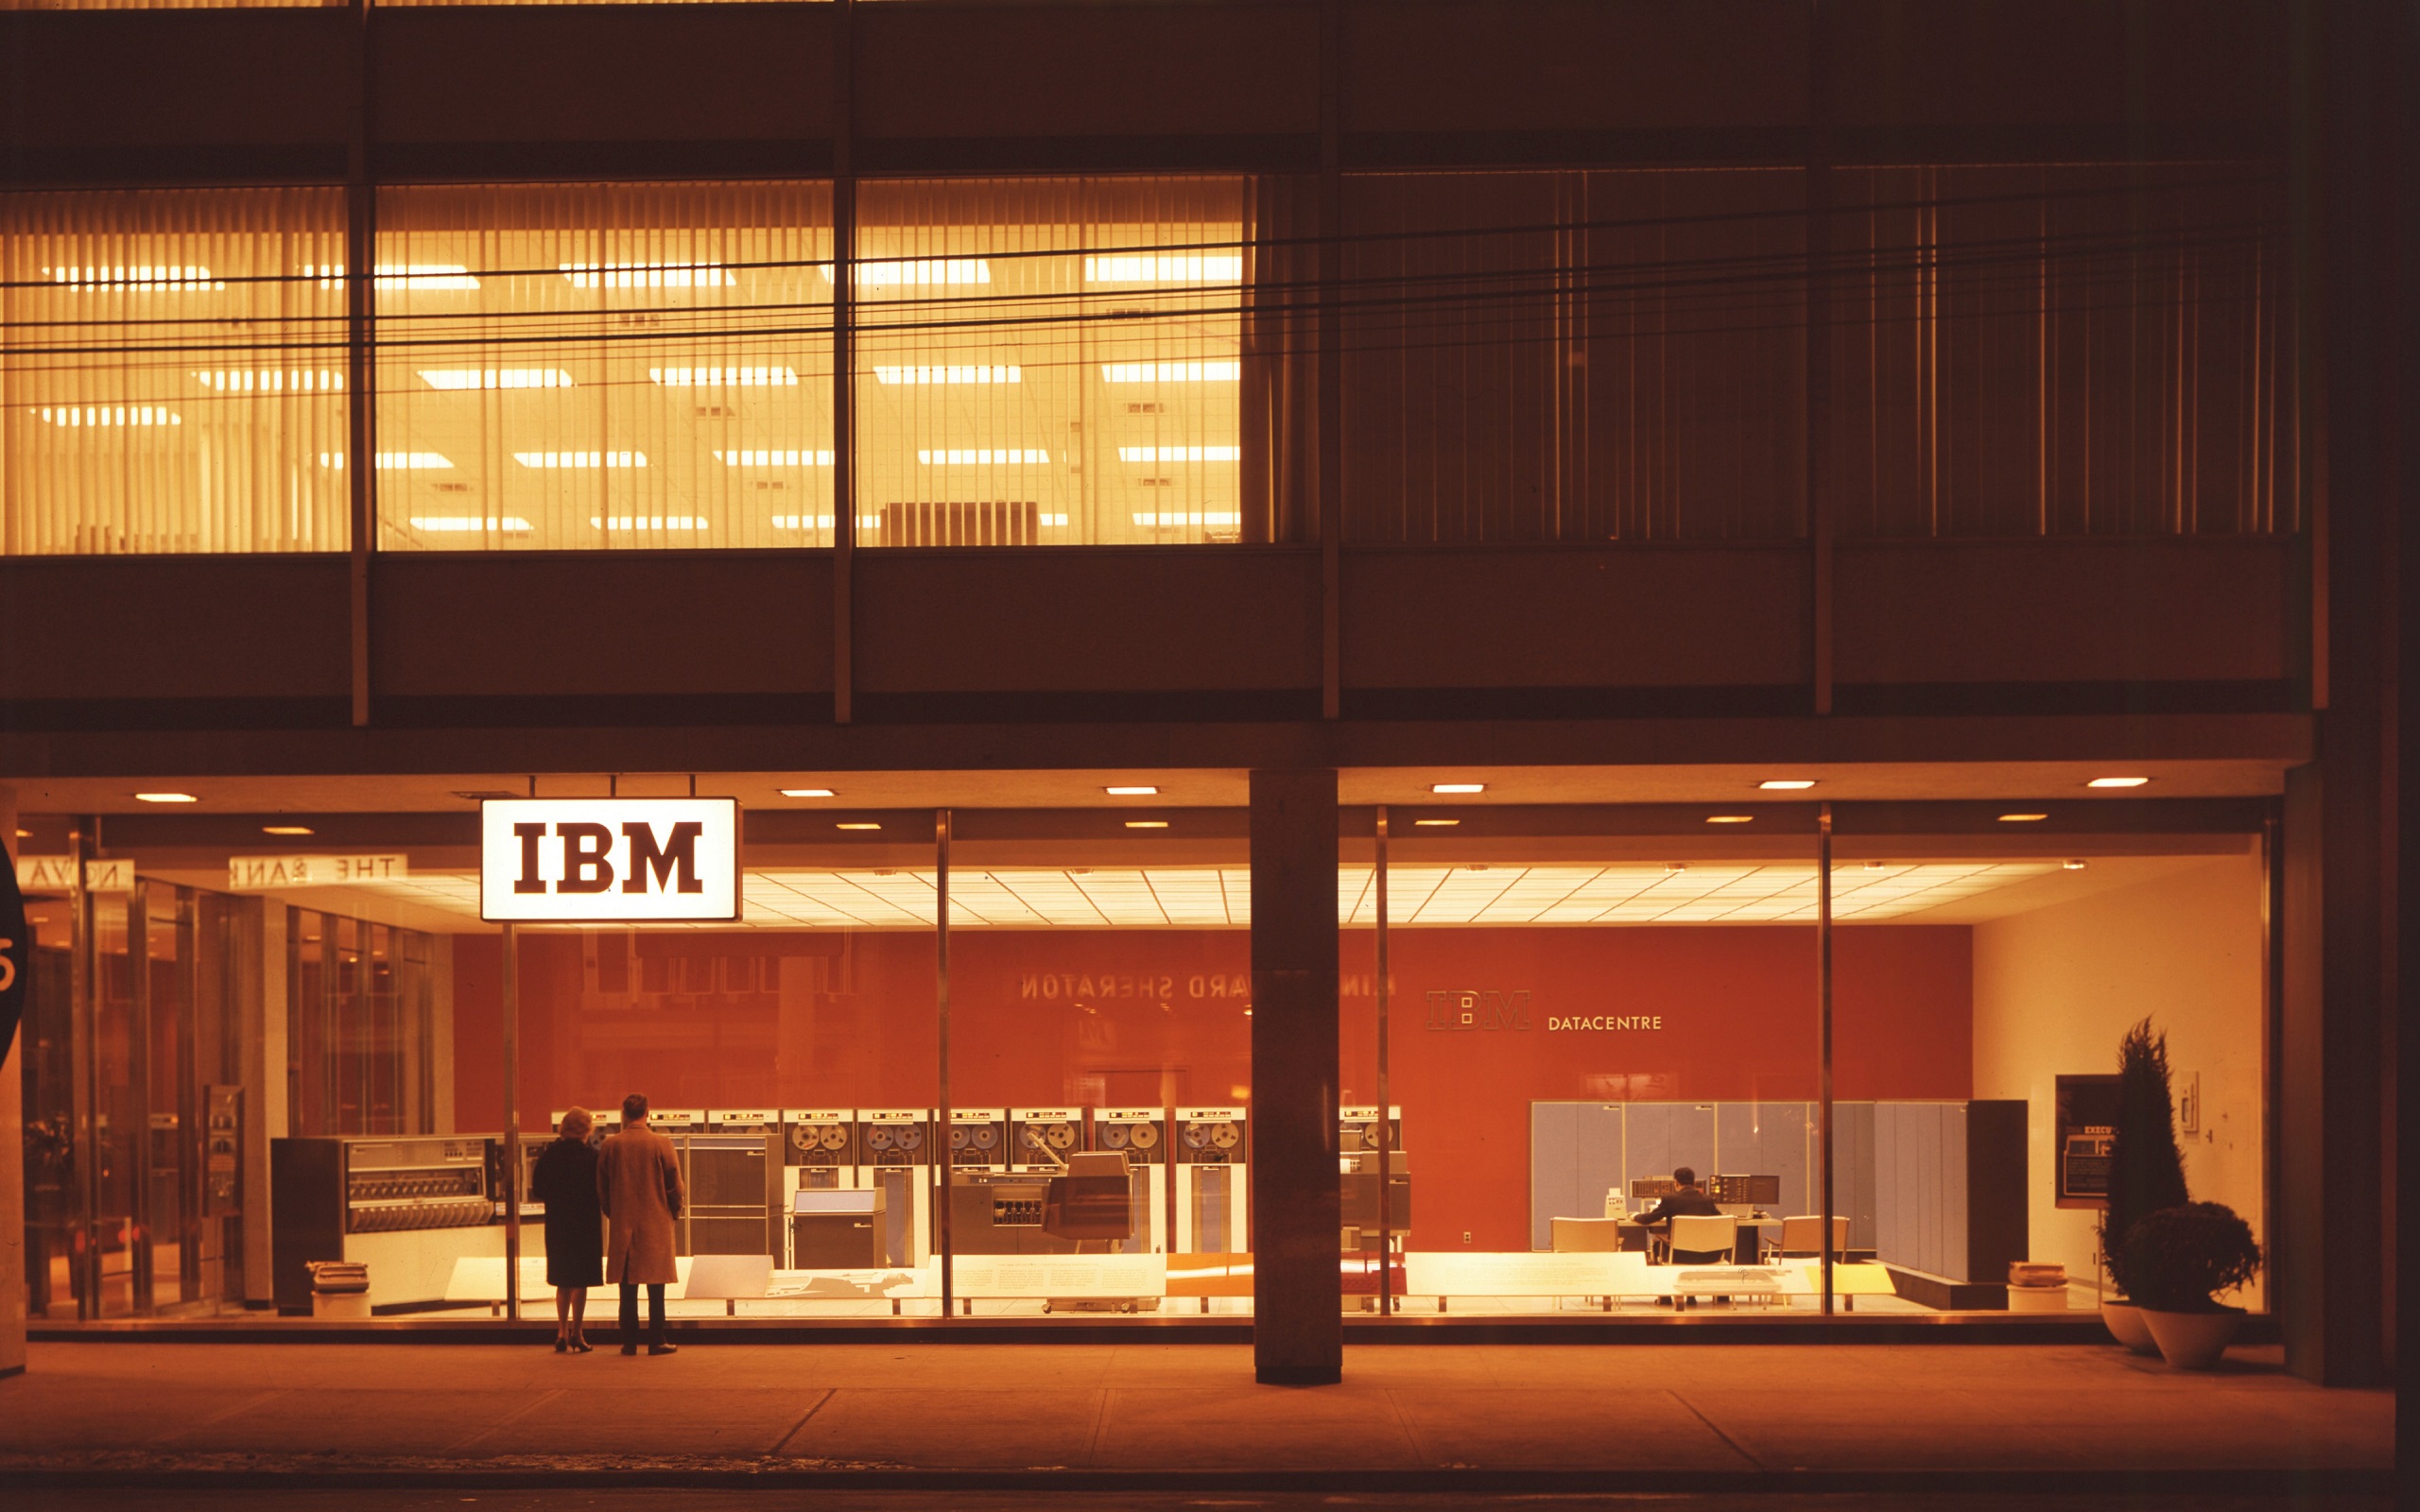 General 2560x1600 IBM technology company computer data center Toronto